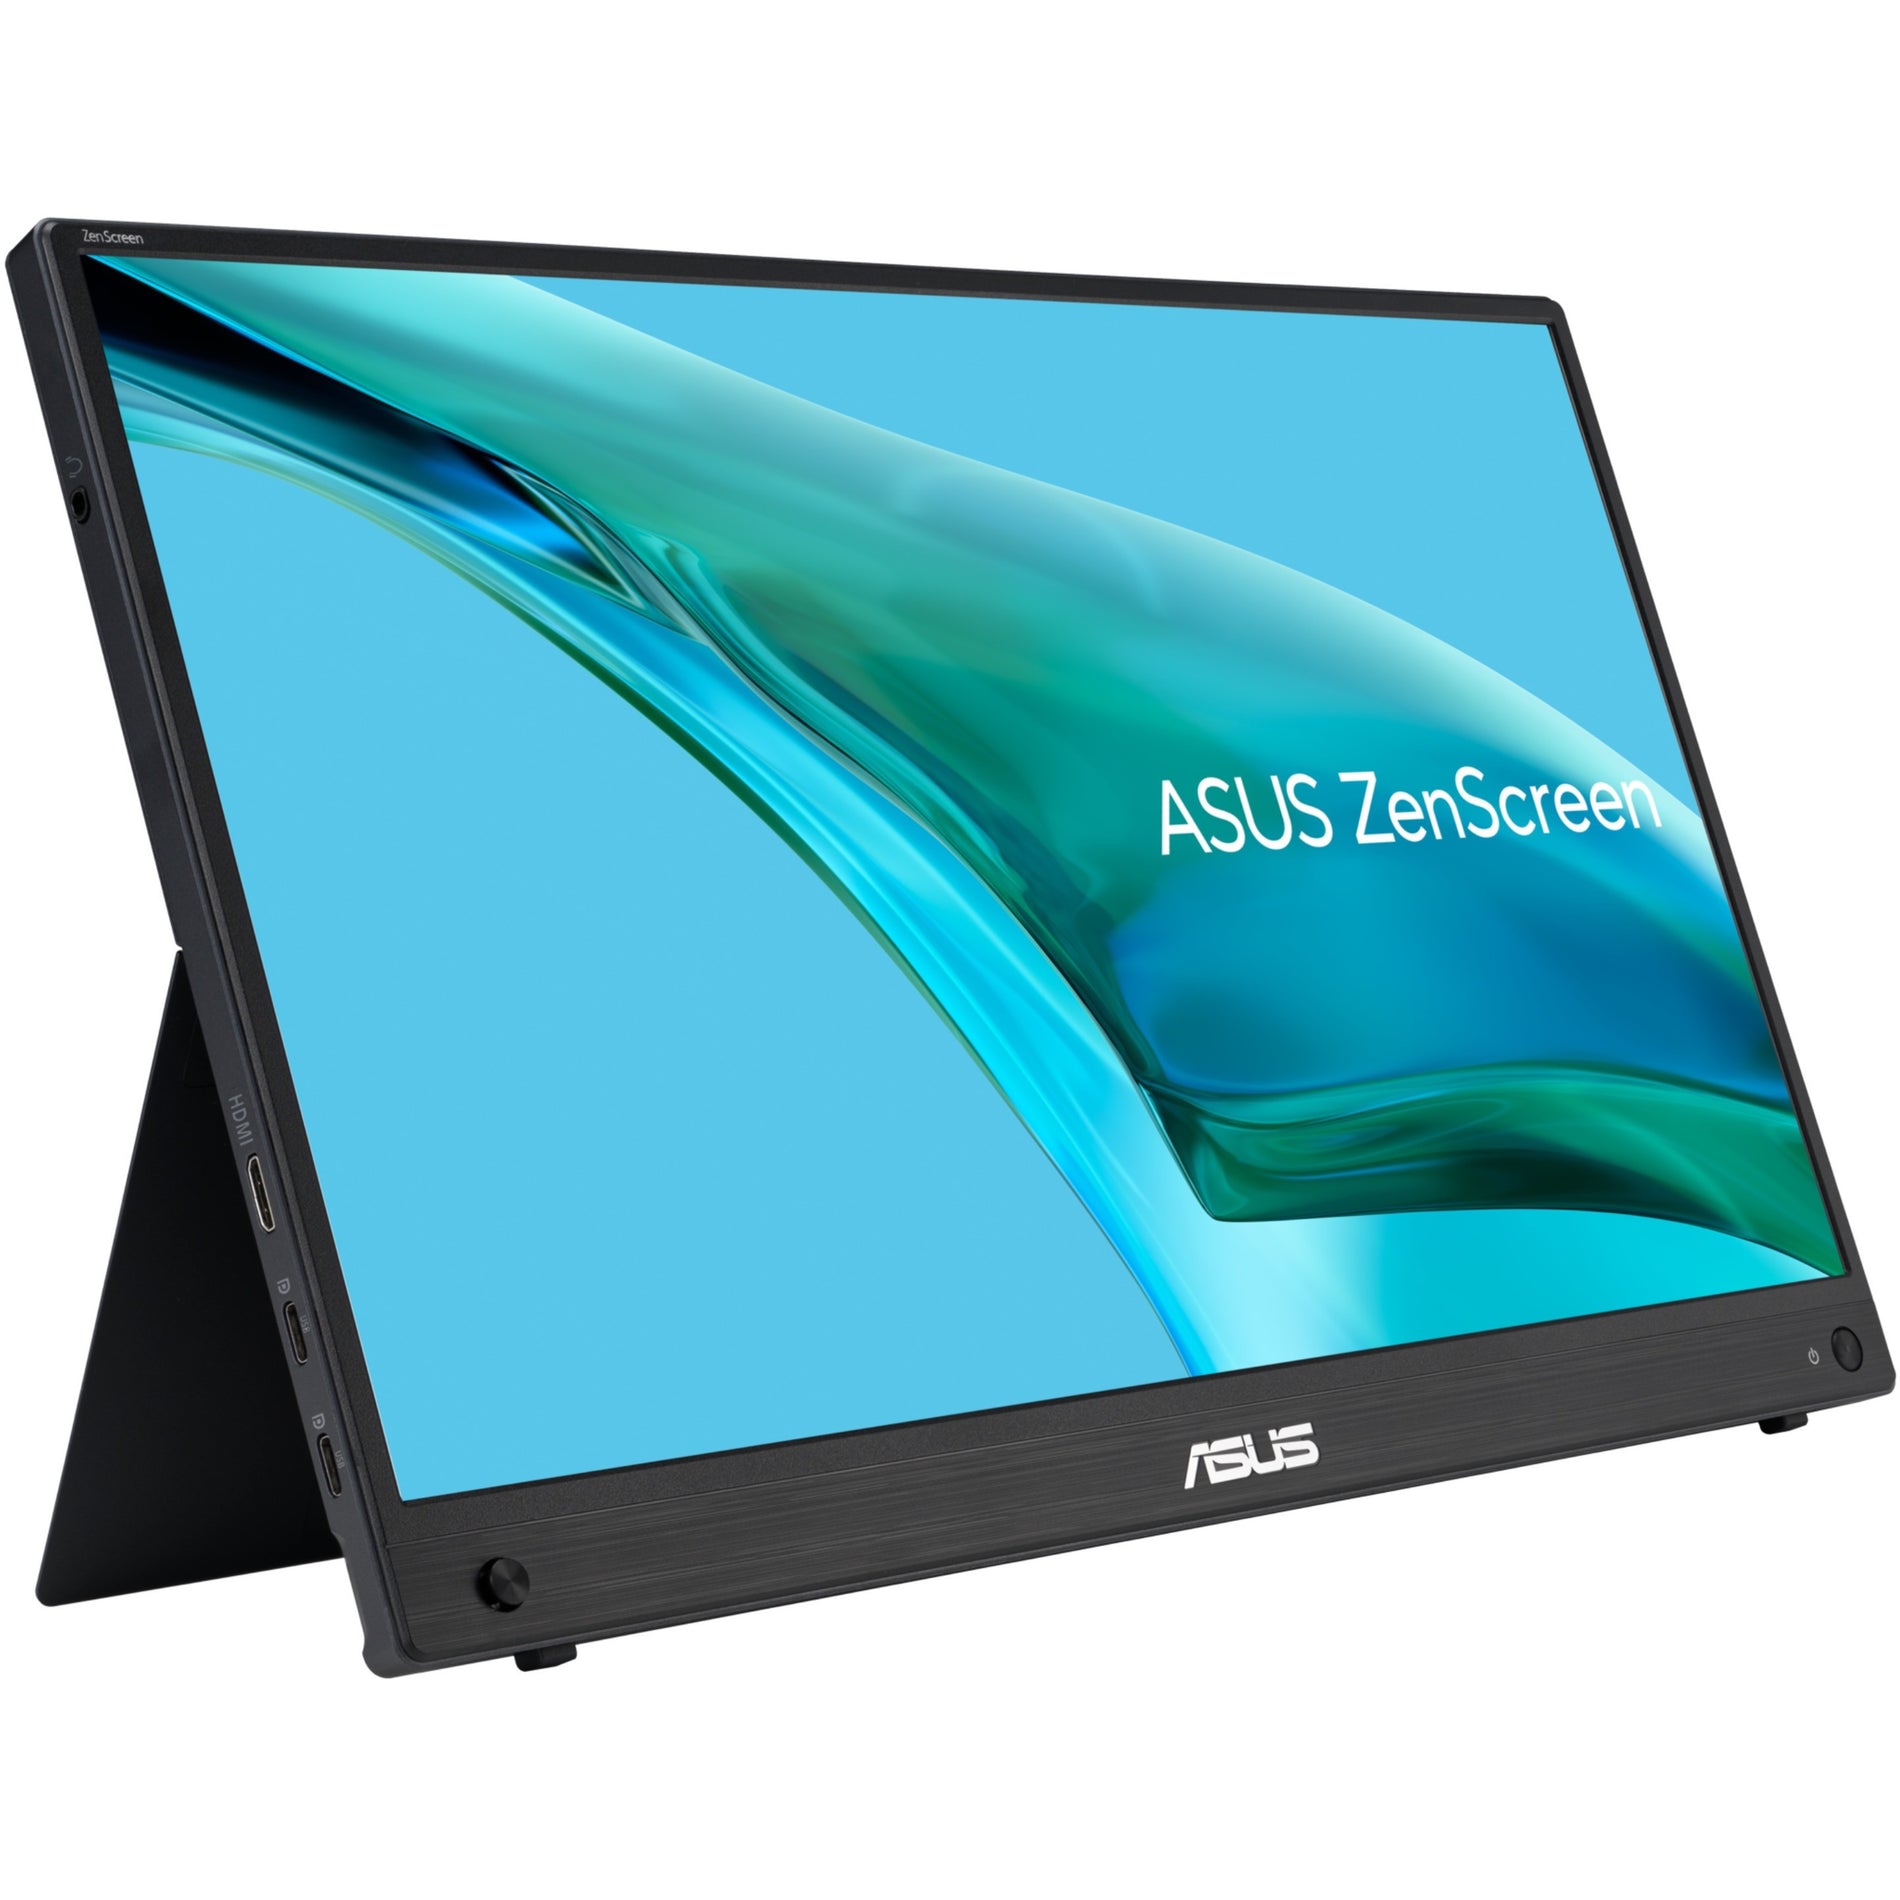 Asus MB16AHG ZenScreen 15.6" Full HD LCD Monitor, 144Hz, FreeSync Premium